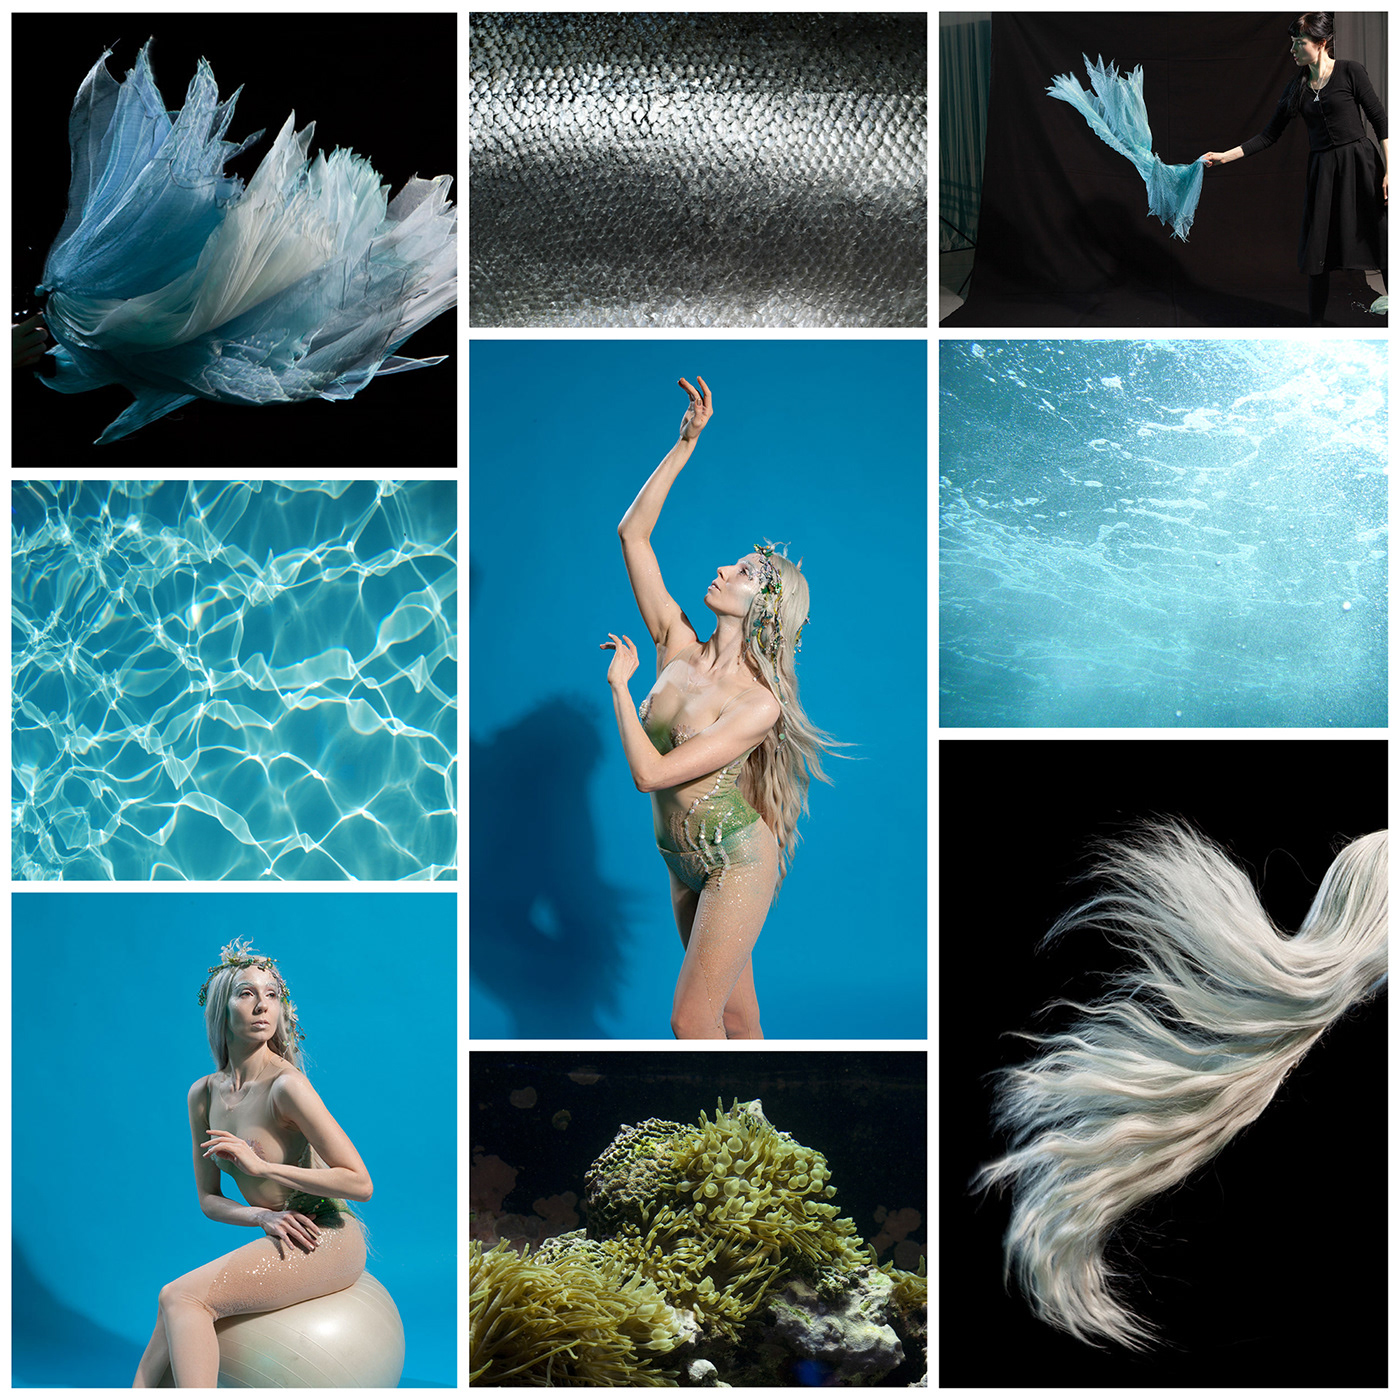 ballet mermaid underwater Digital Art  fantasy fairytale key art Photography  Poster Design